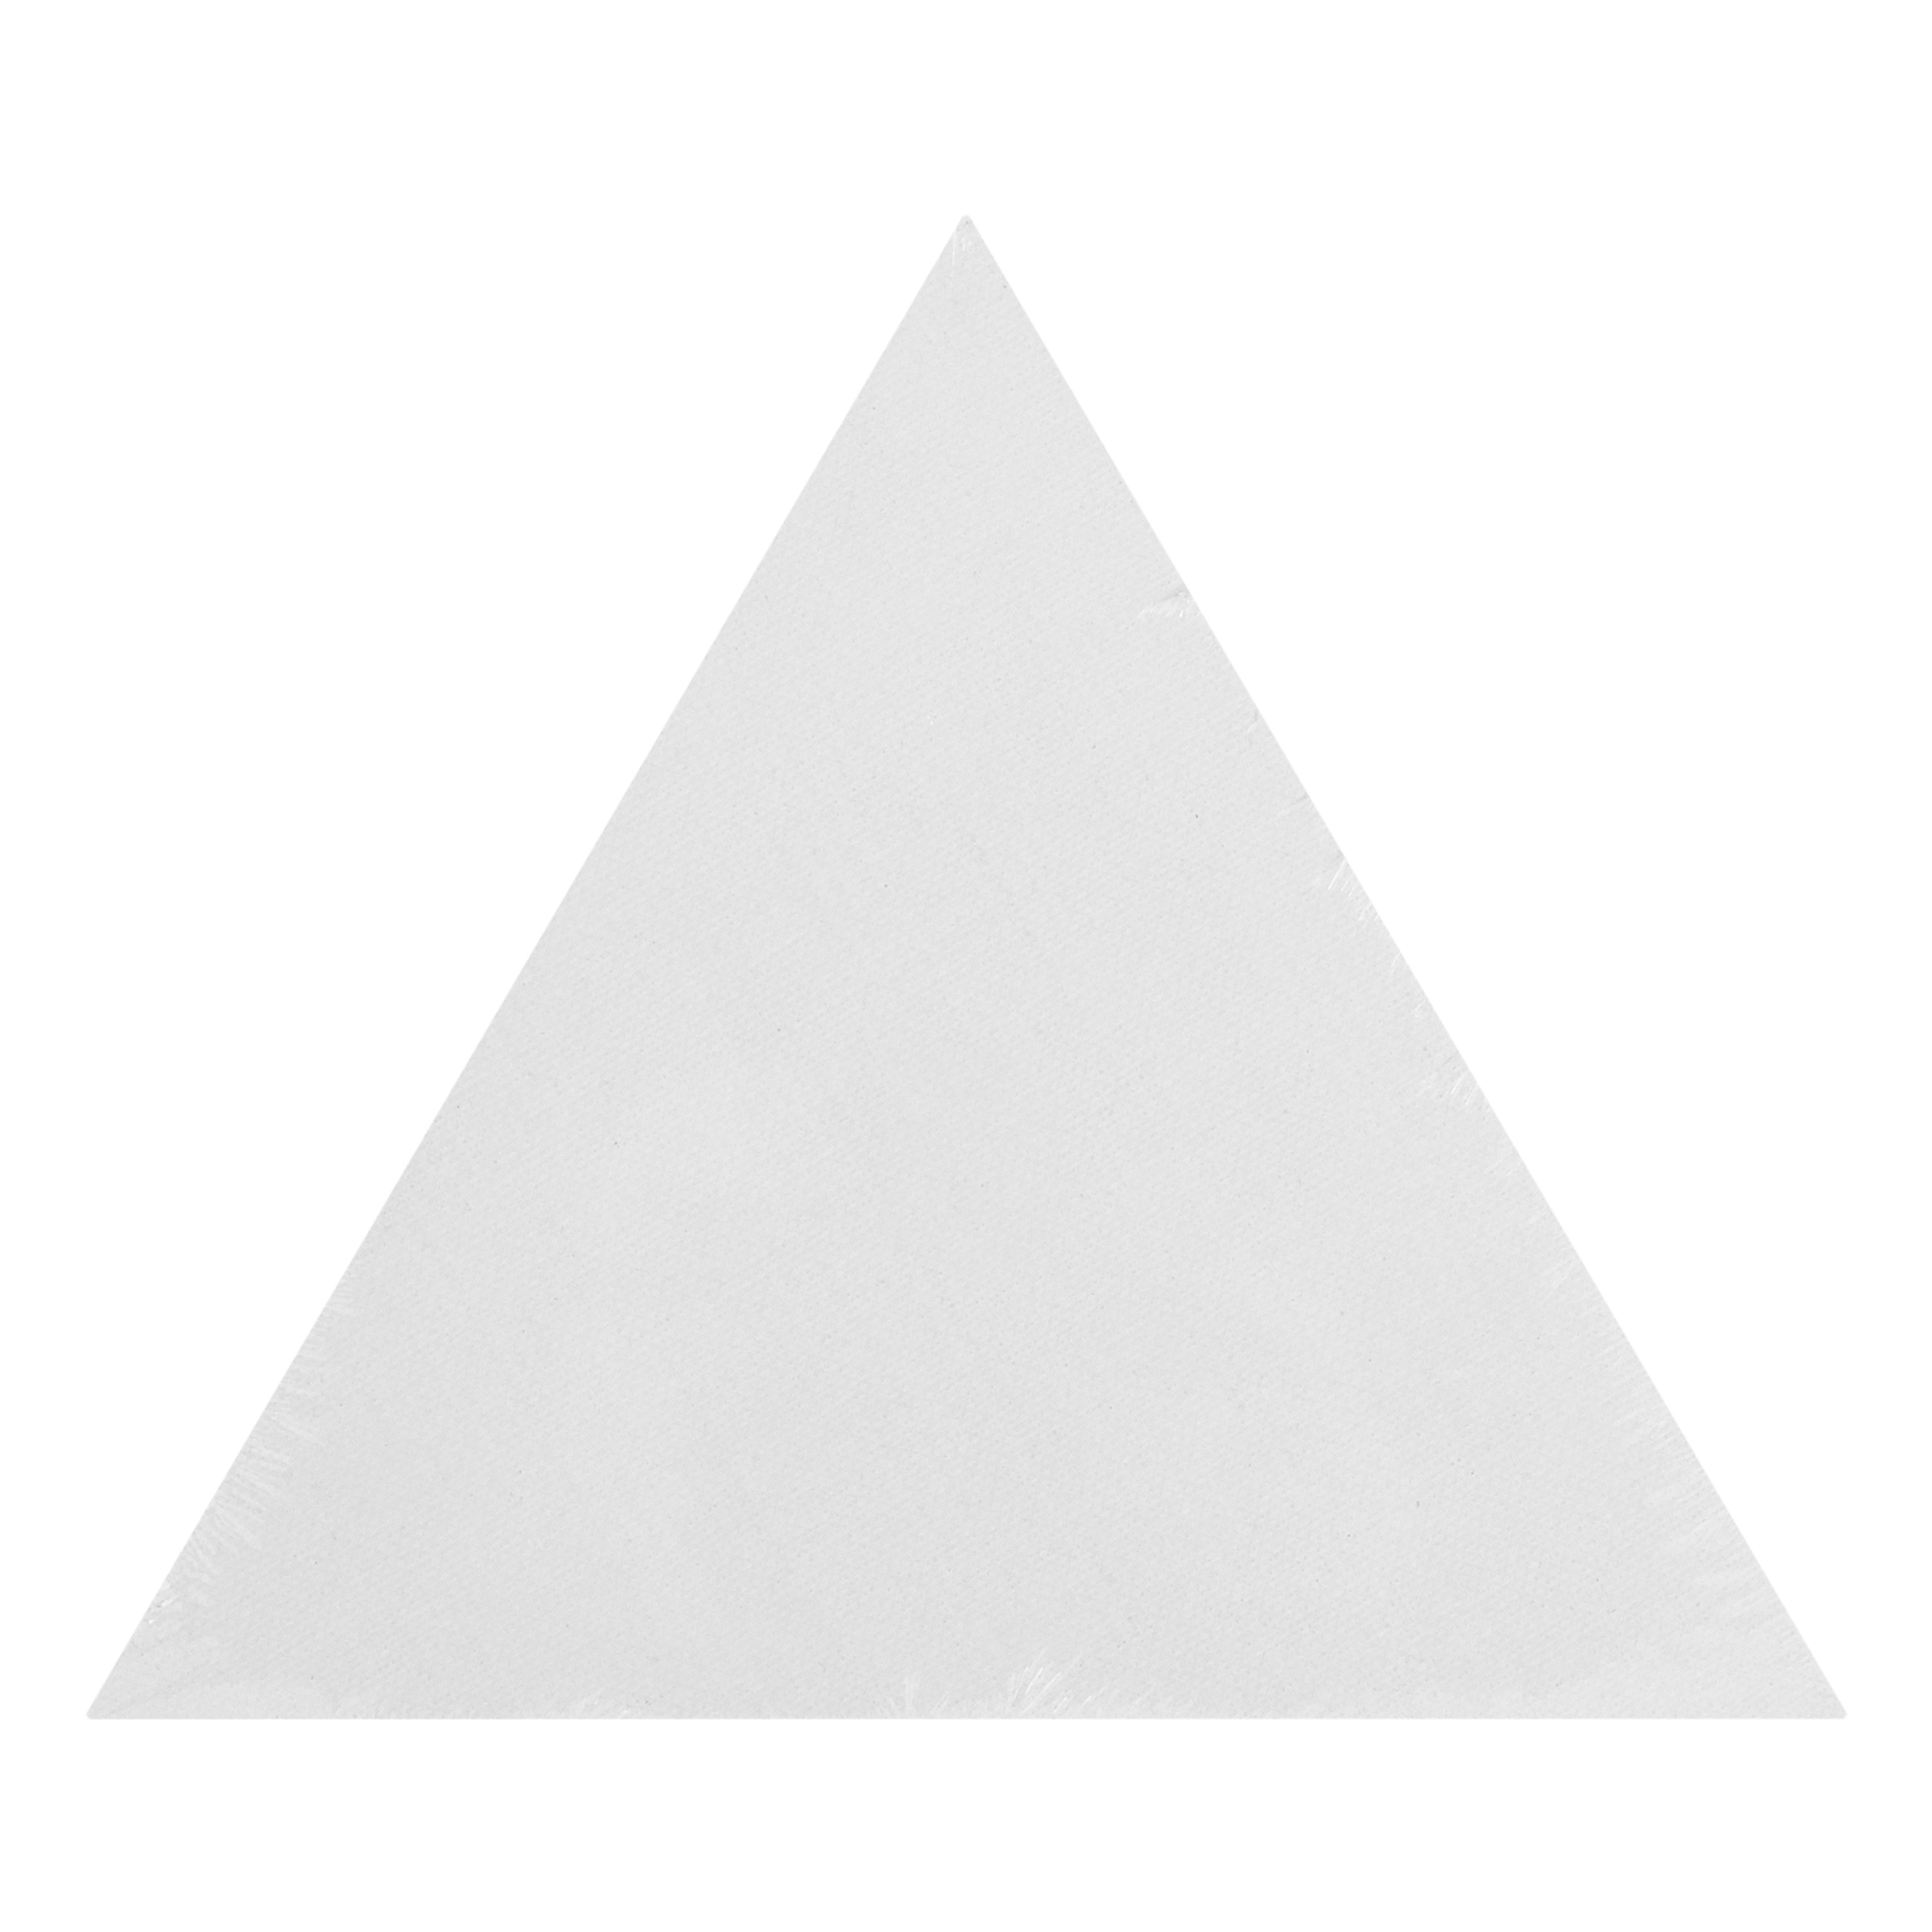 Canvas panel "Sonnet", triangular, 280 g/m2, 100% cotton, acrylic primer, medium grain